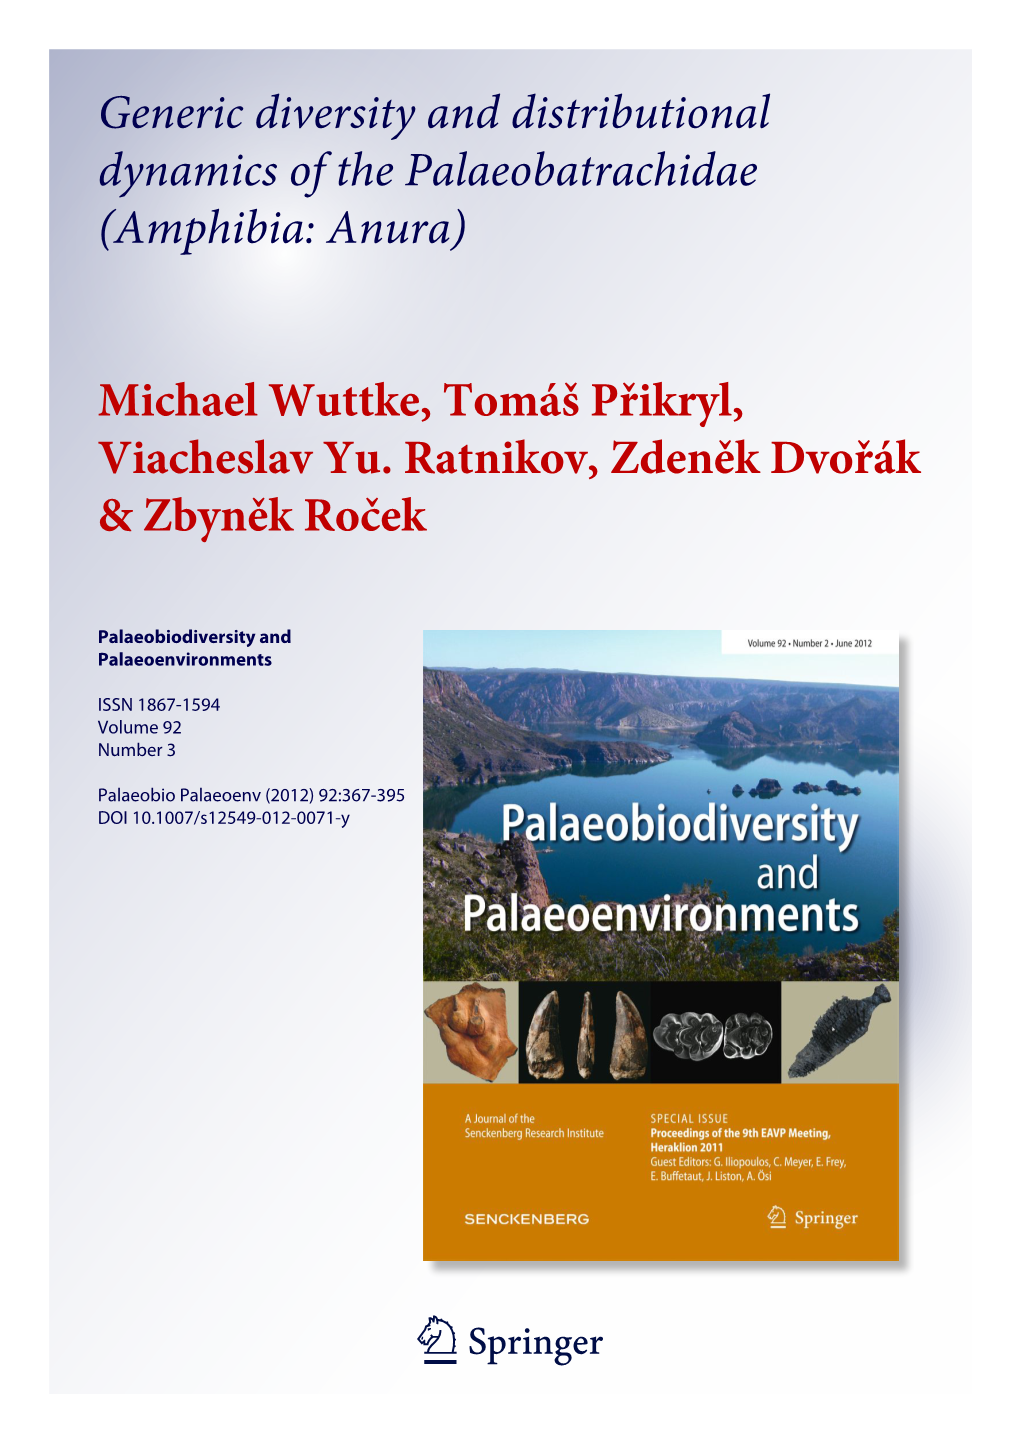 Generic Diversity and Distributional Dynamics of the Palaeobatrachidae (Amphibia: Anura) Michael Wuttke, Tomáš Přikryl, Viach